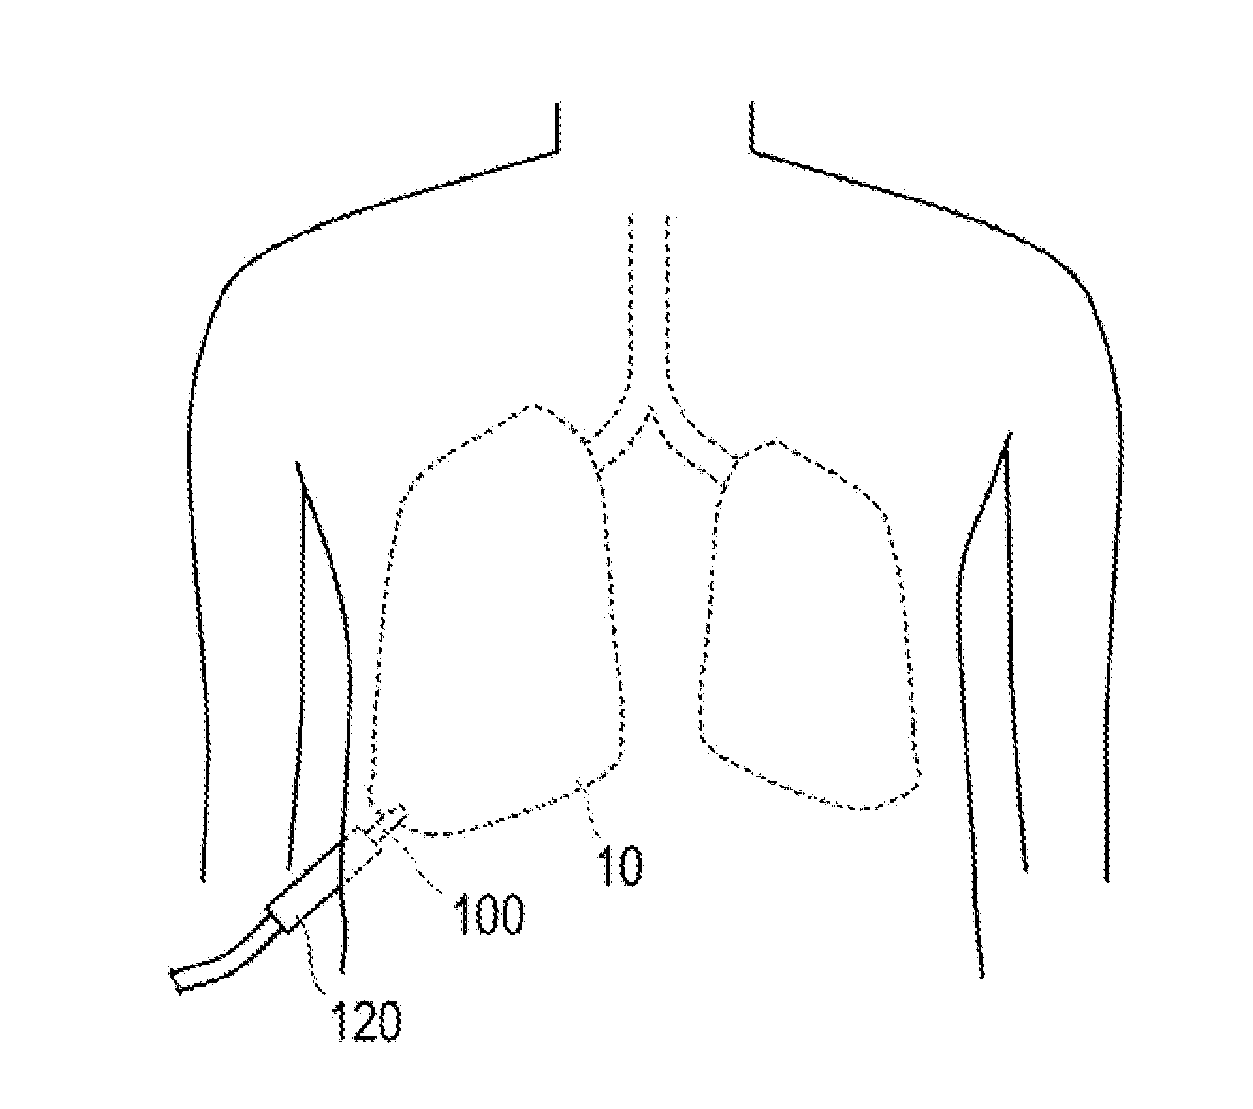 Lung volume reduction method